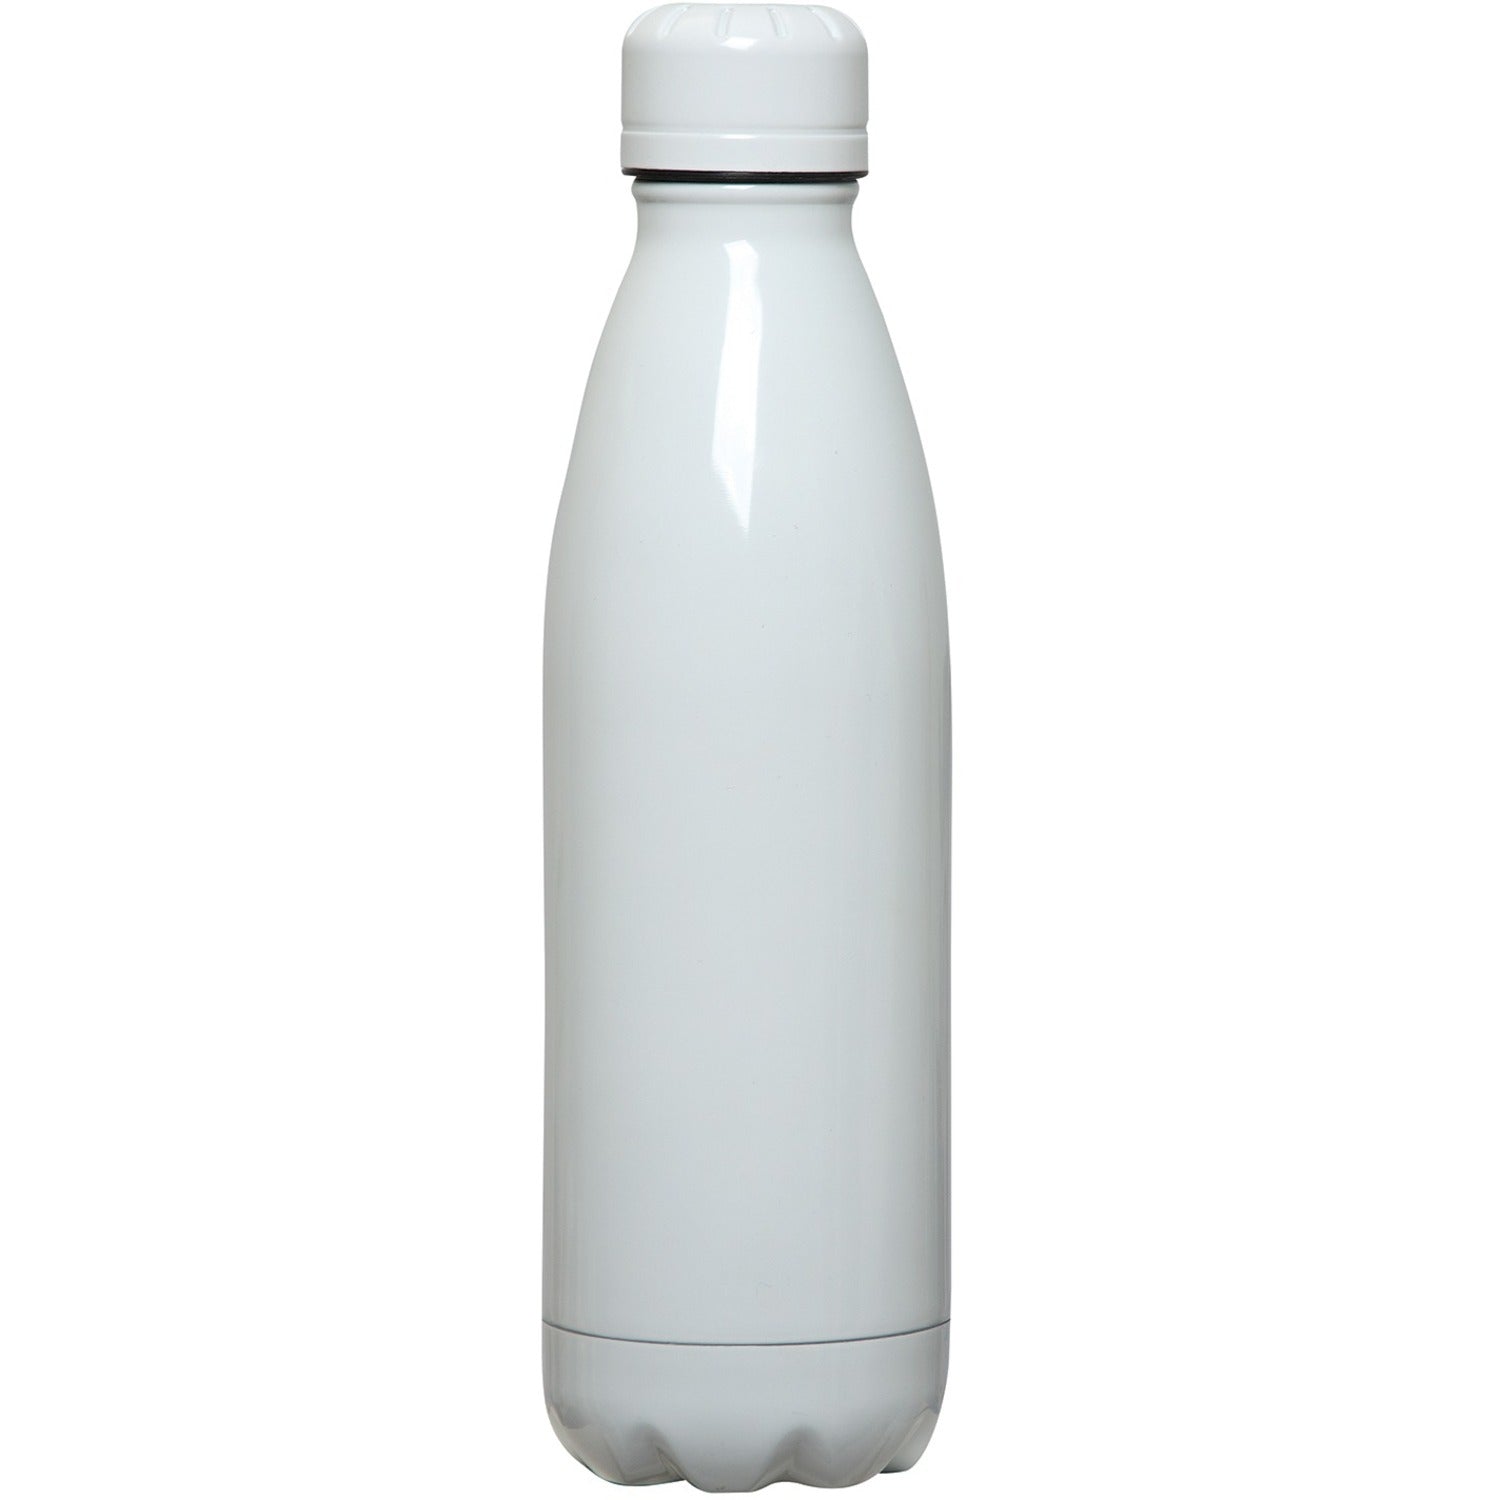 DURA Insulated Water Bottle